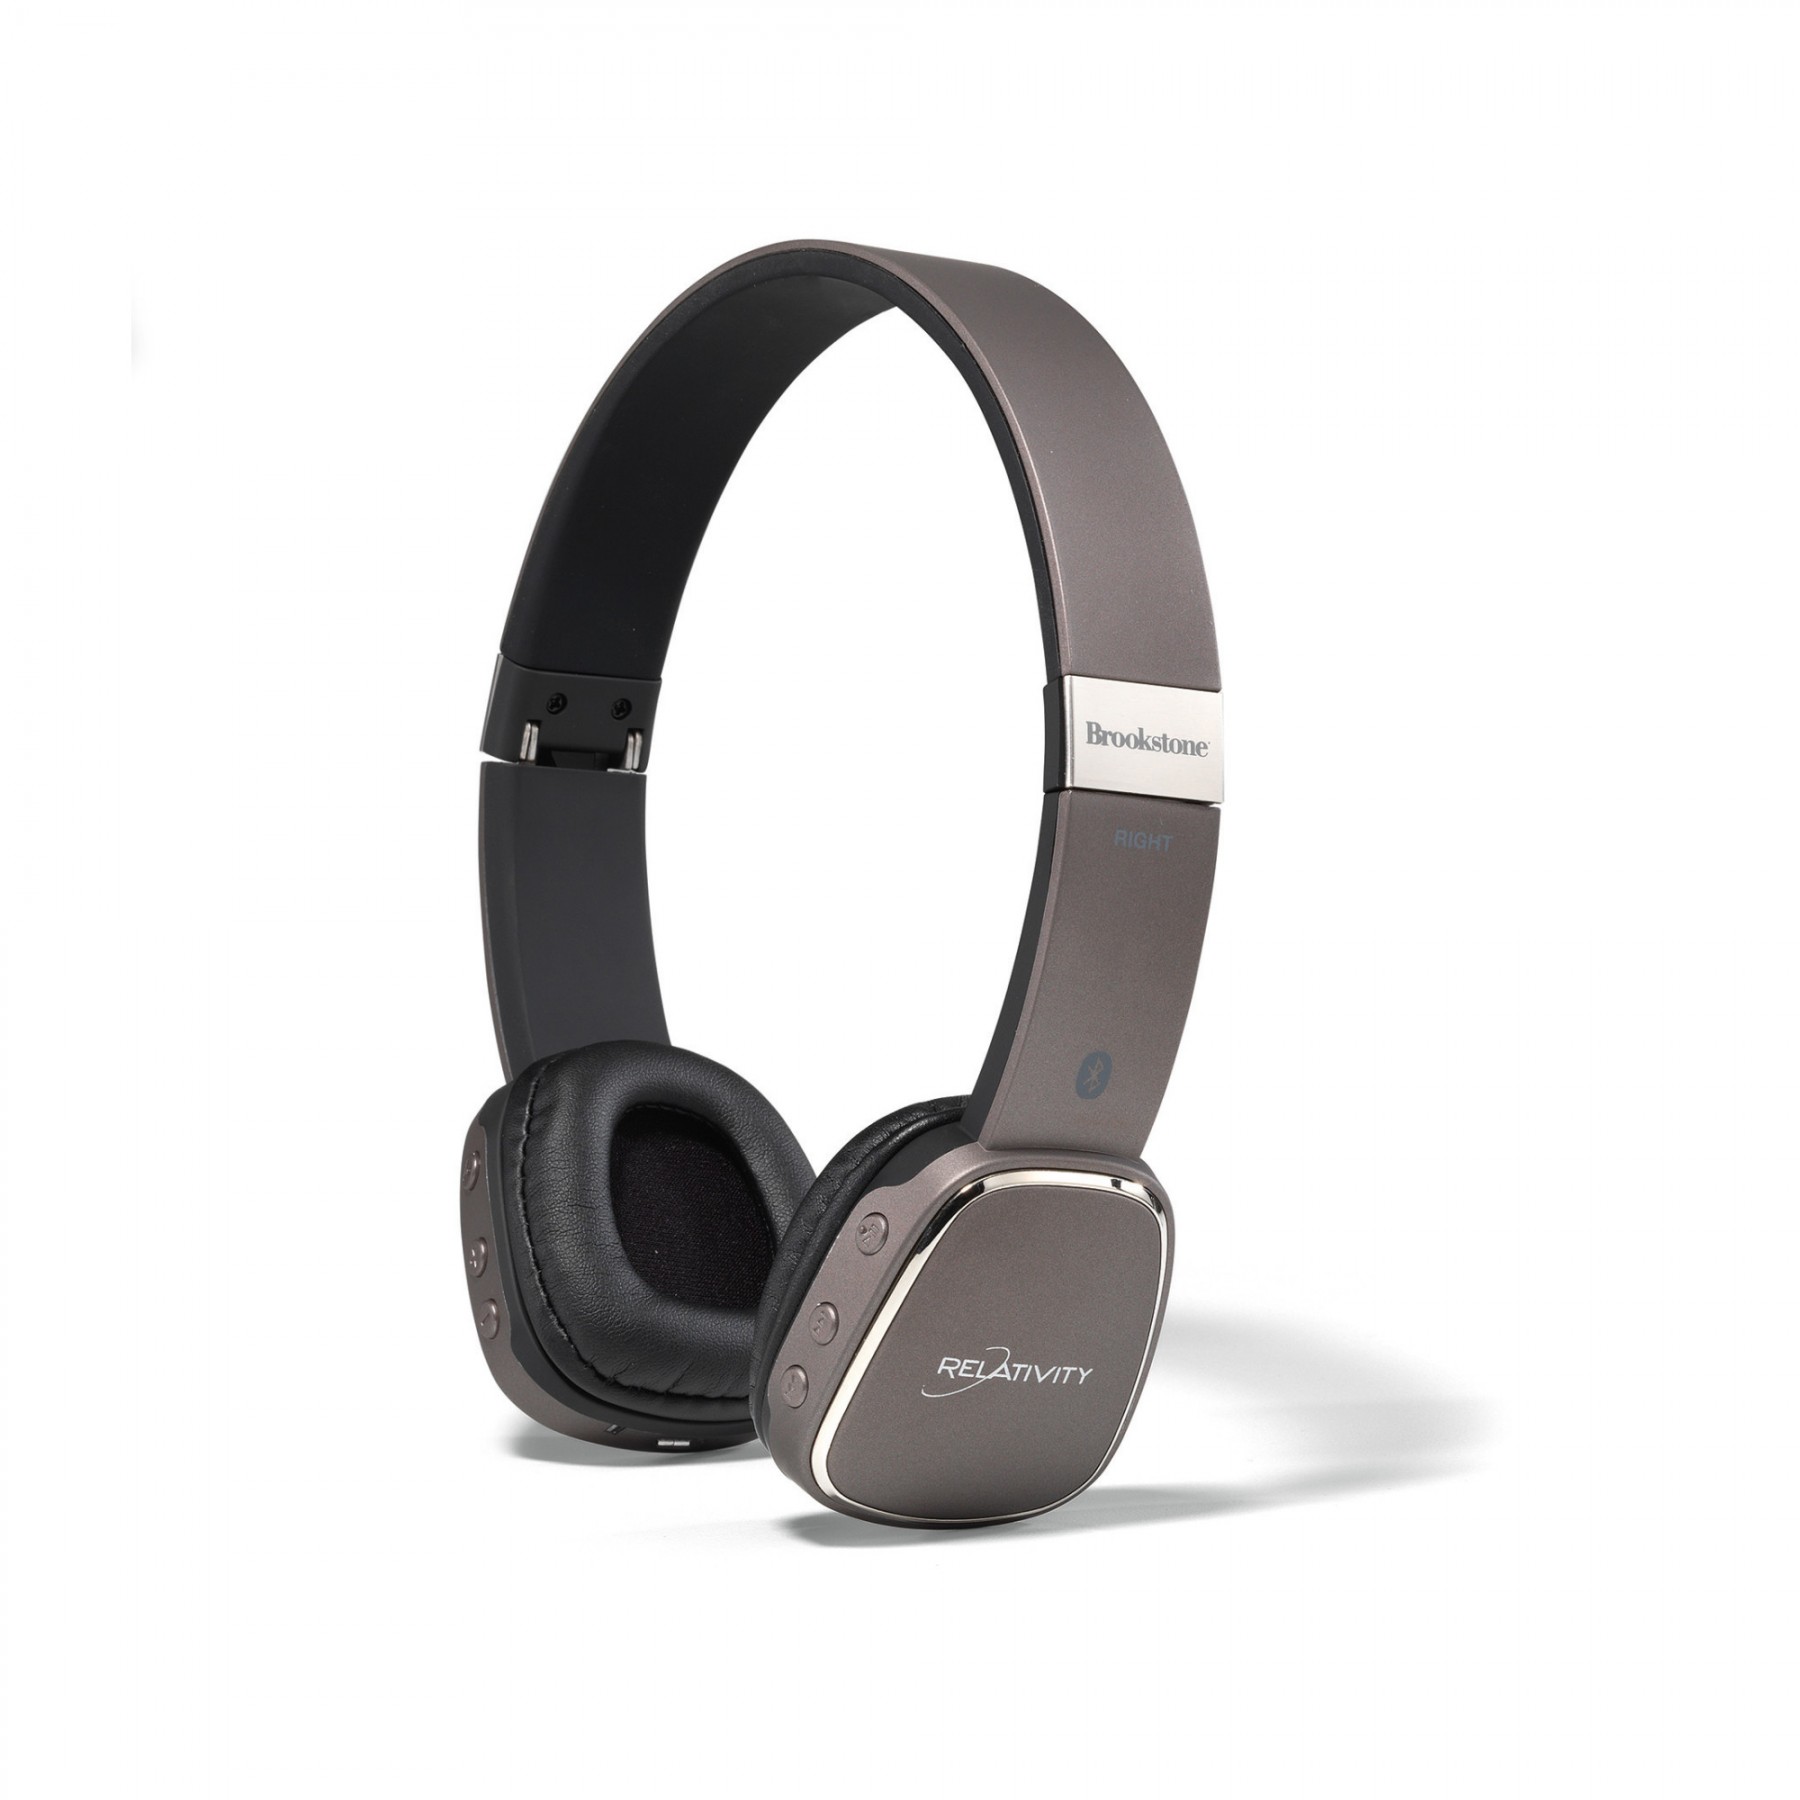 Brookstone Pro Bluetooth Headphones